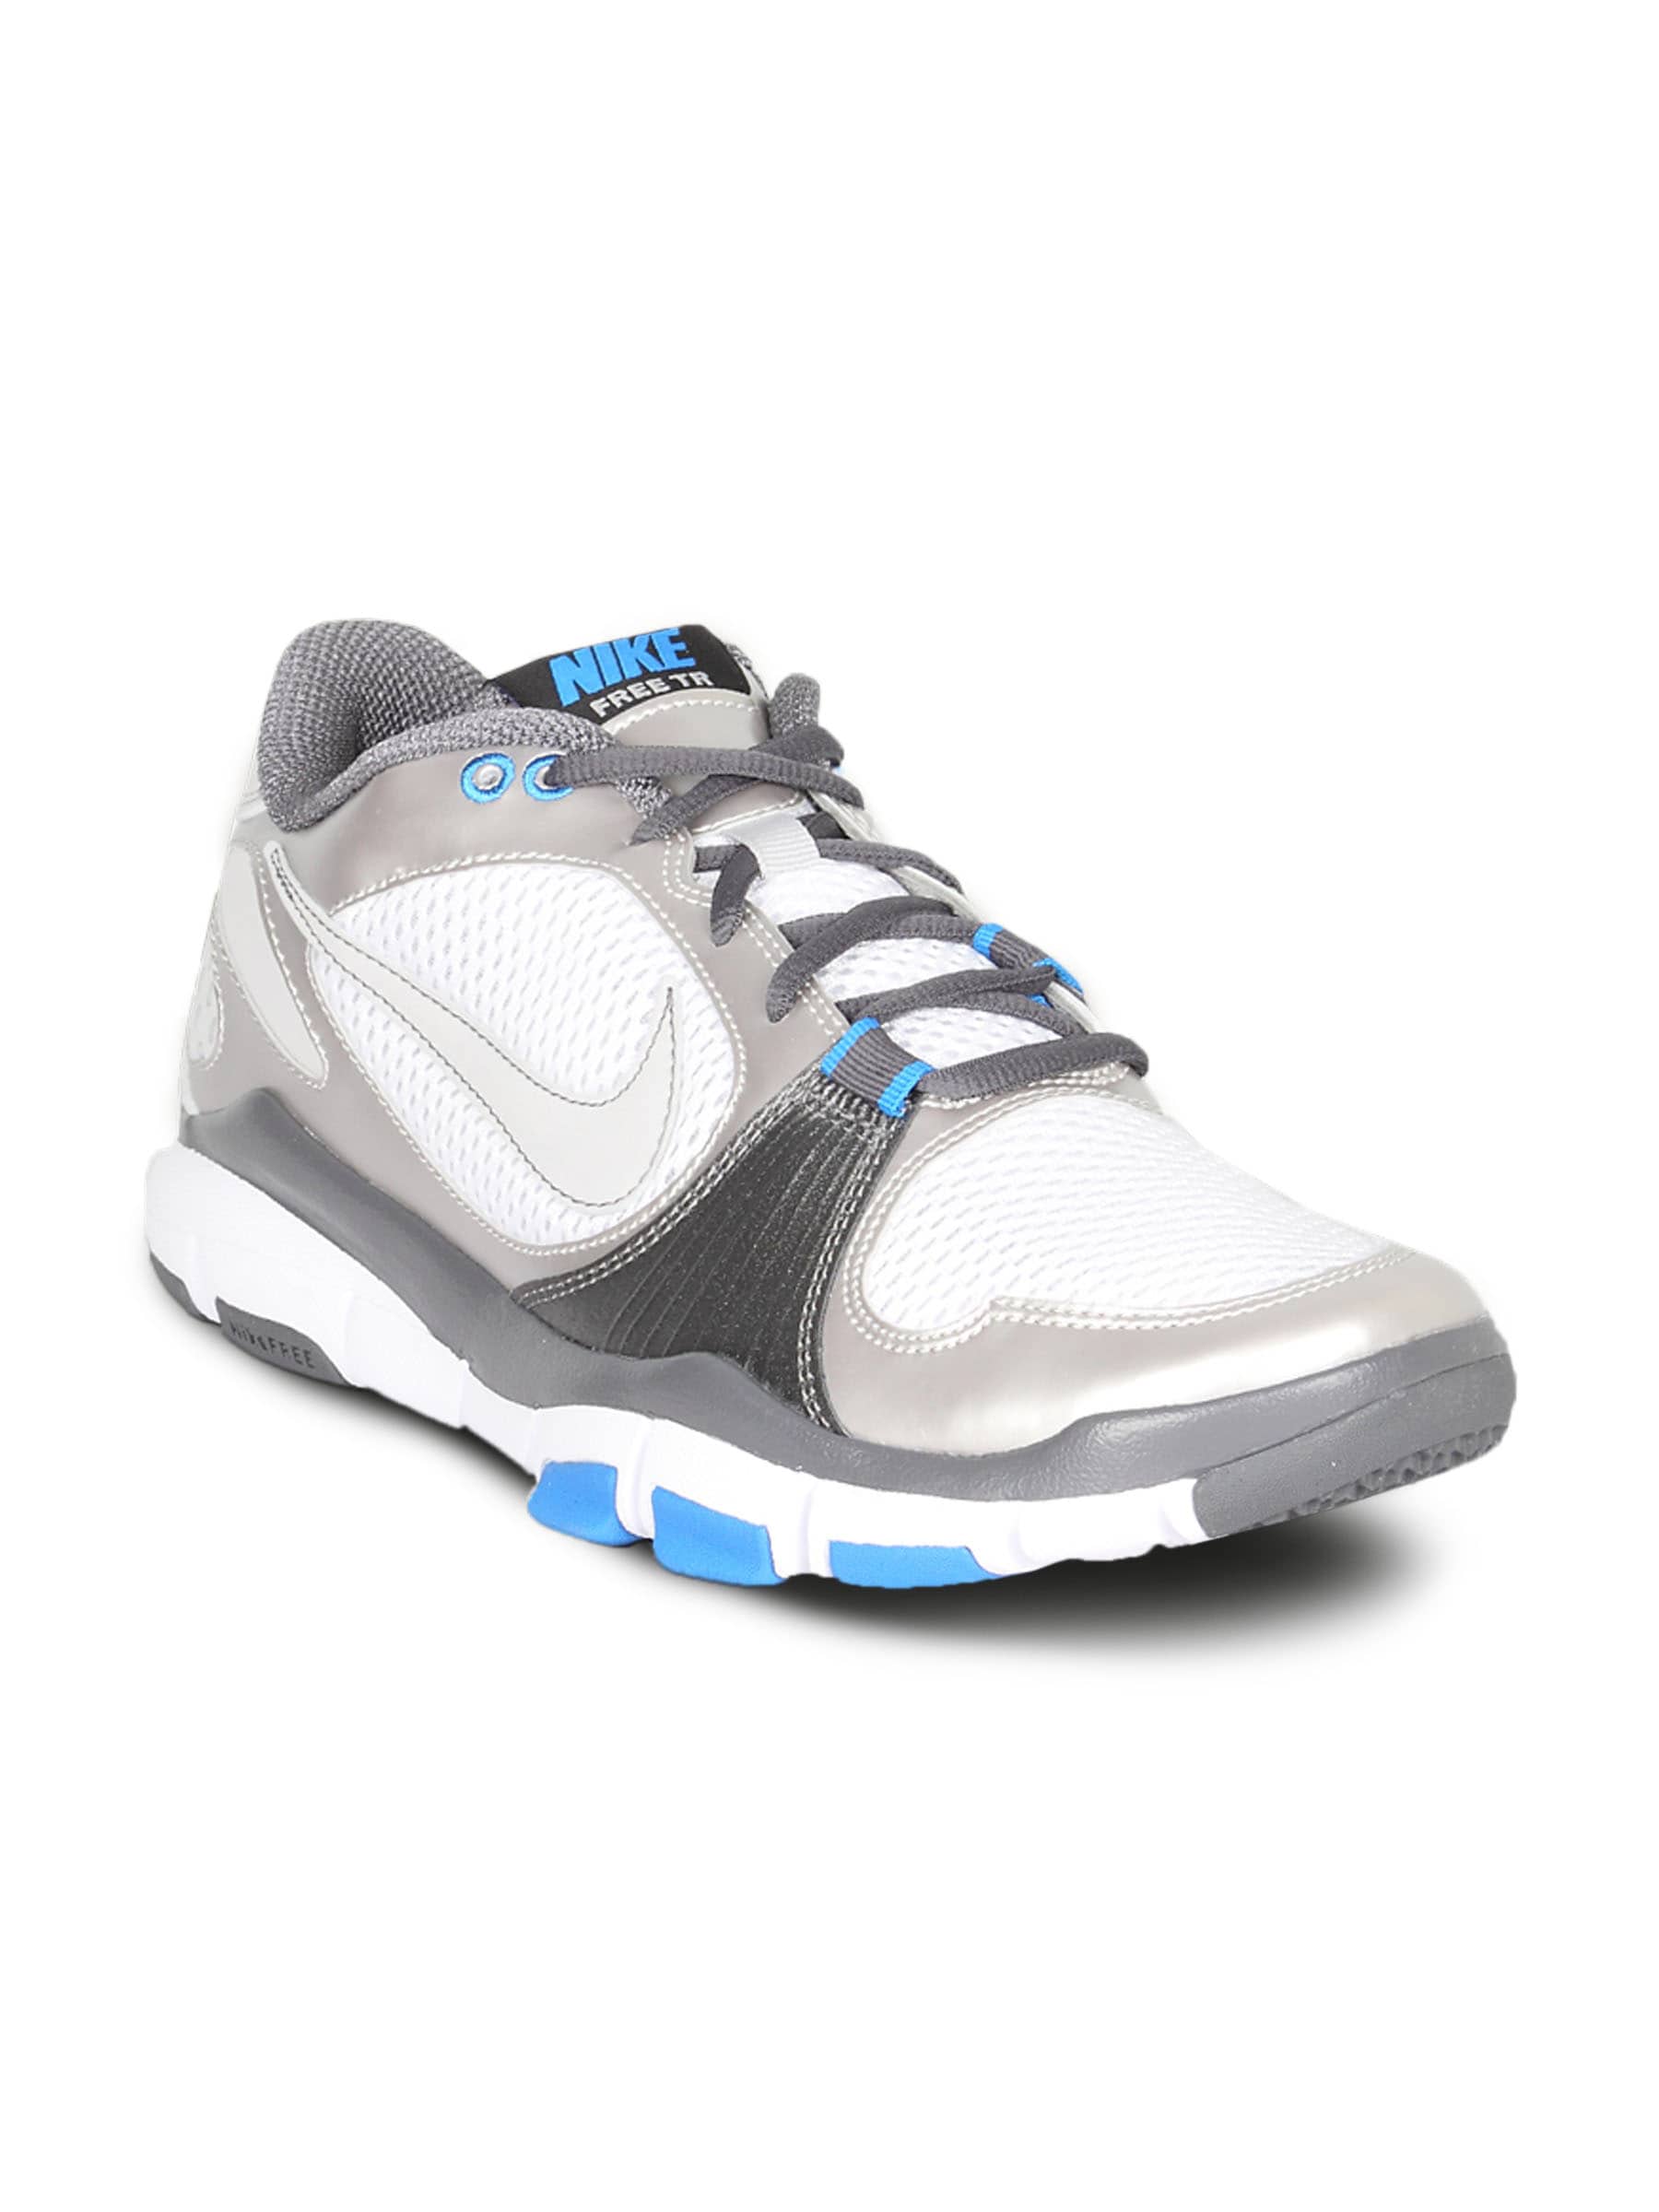 Nike Men's Free White Grey Shoe